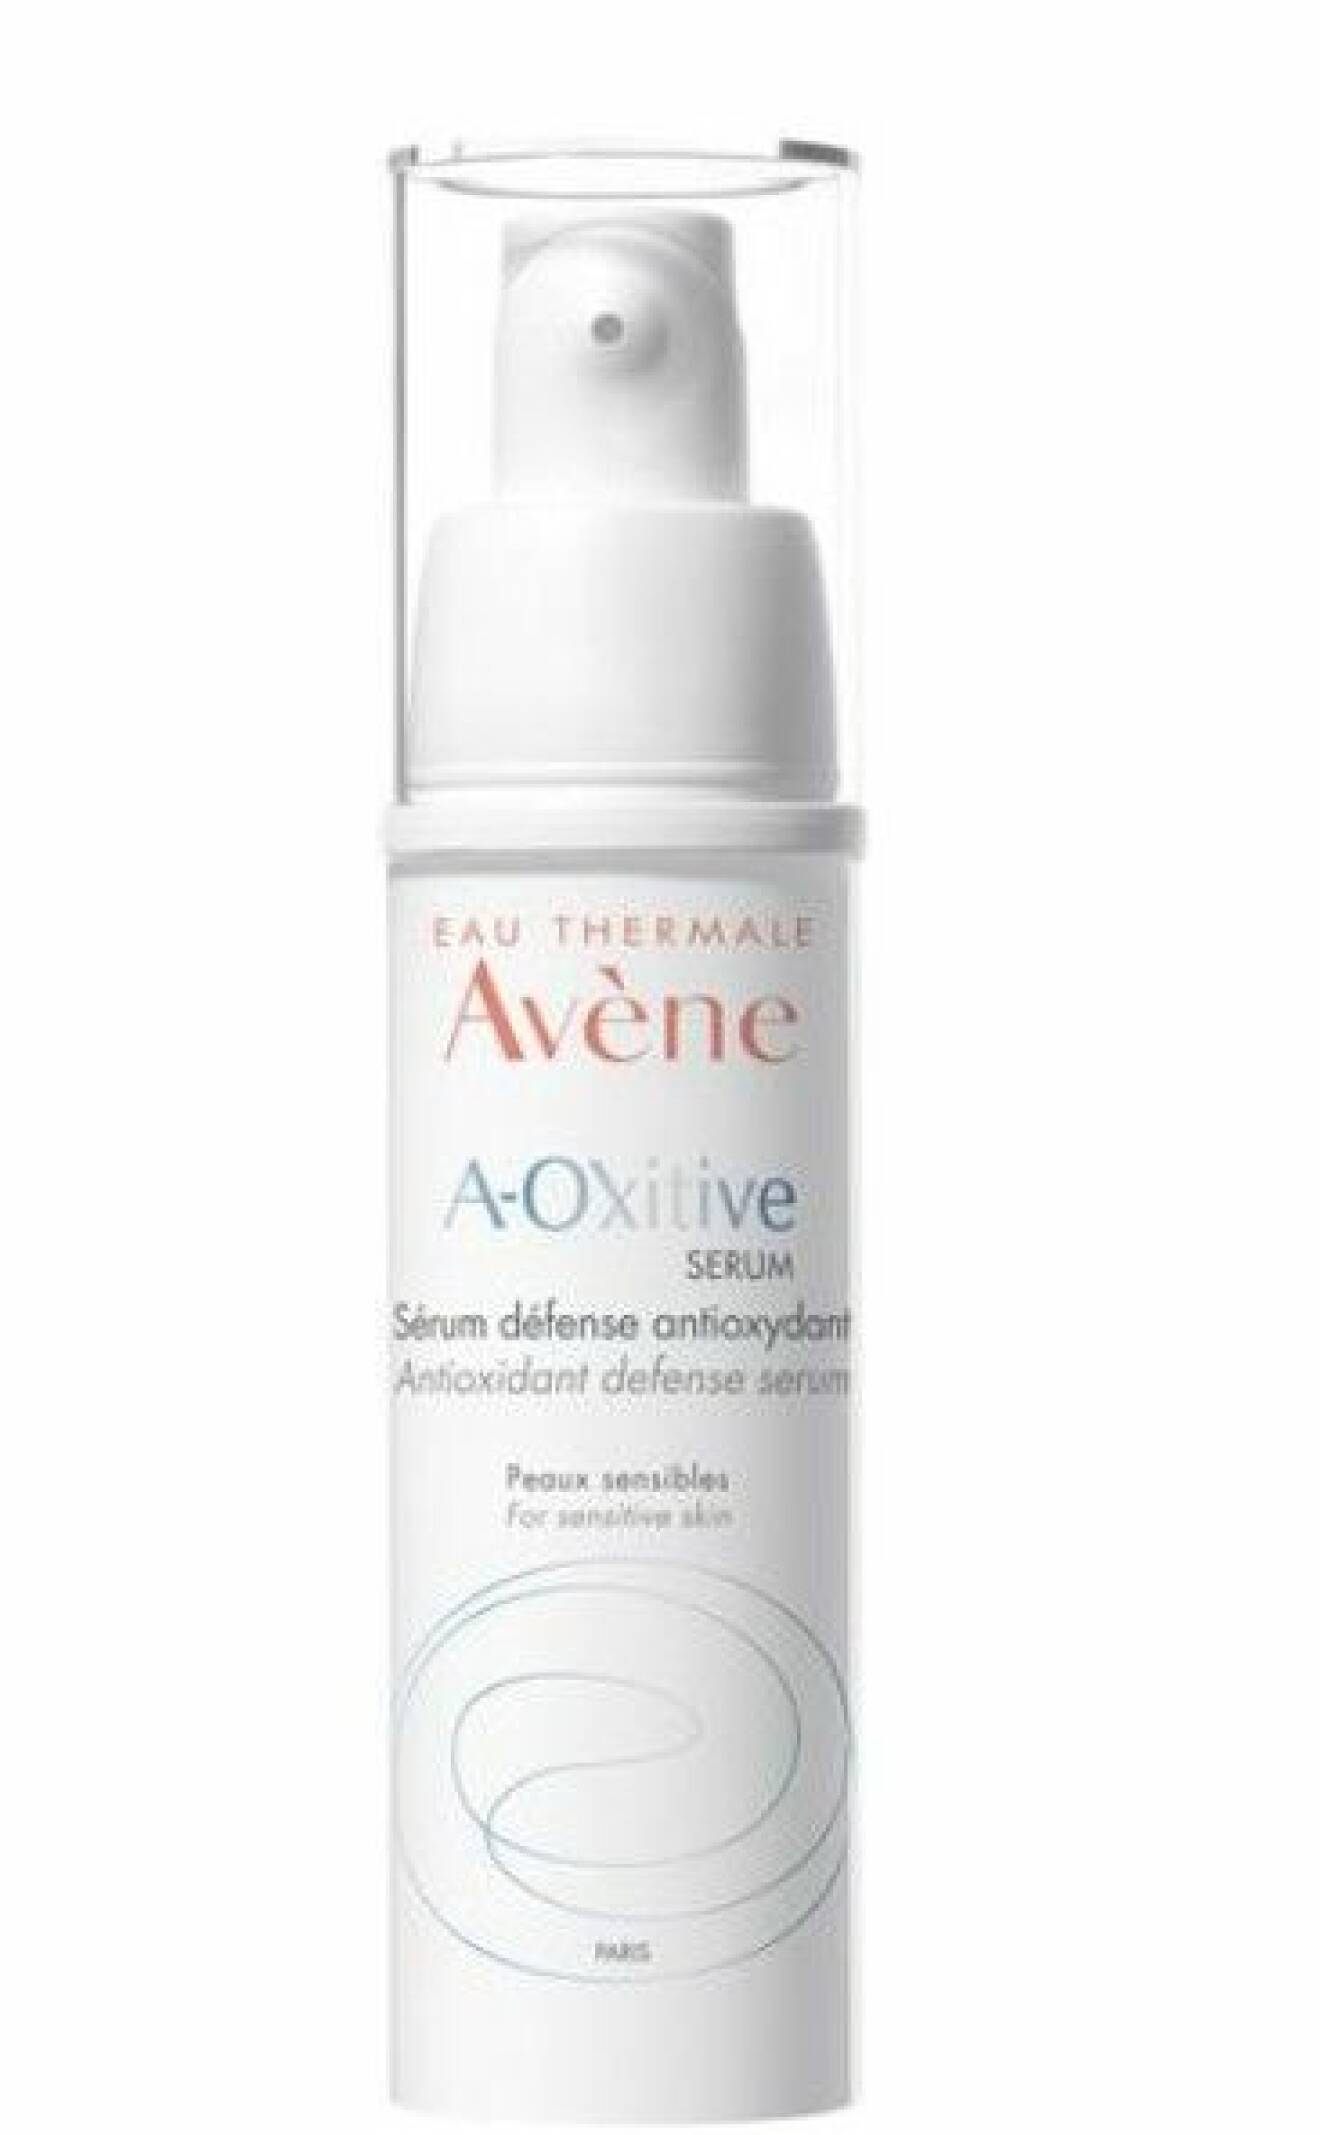 Avène A-Oxitive Antioxidant Defence Serum